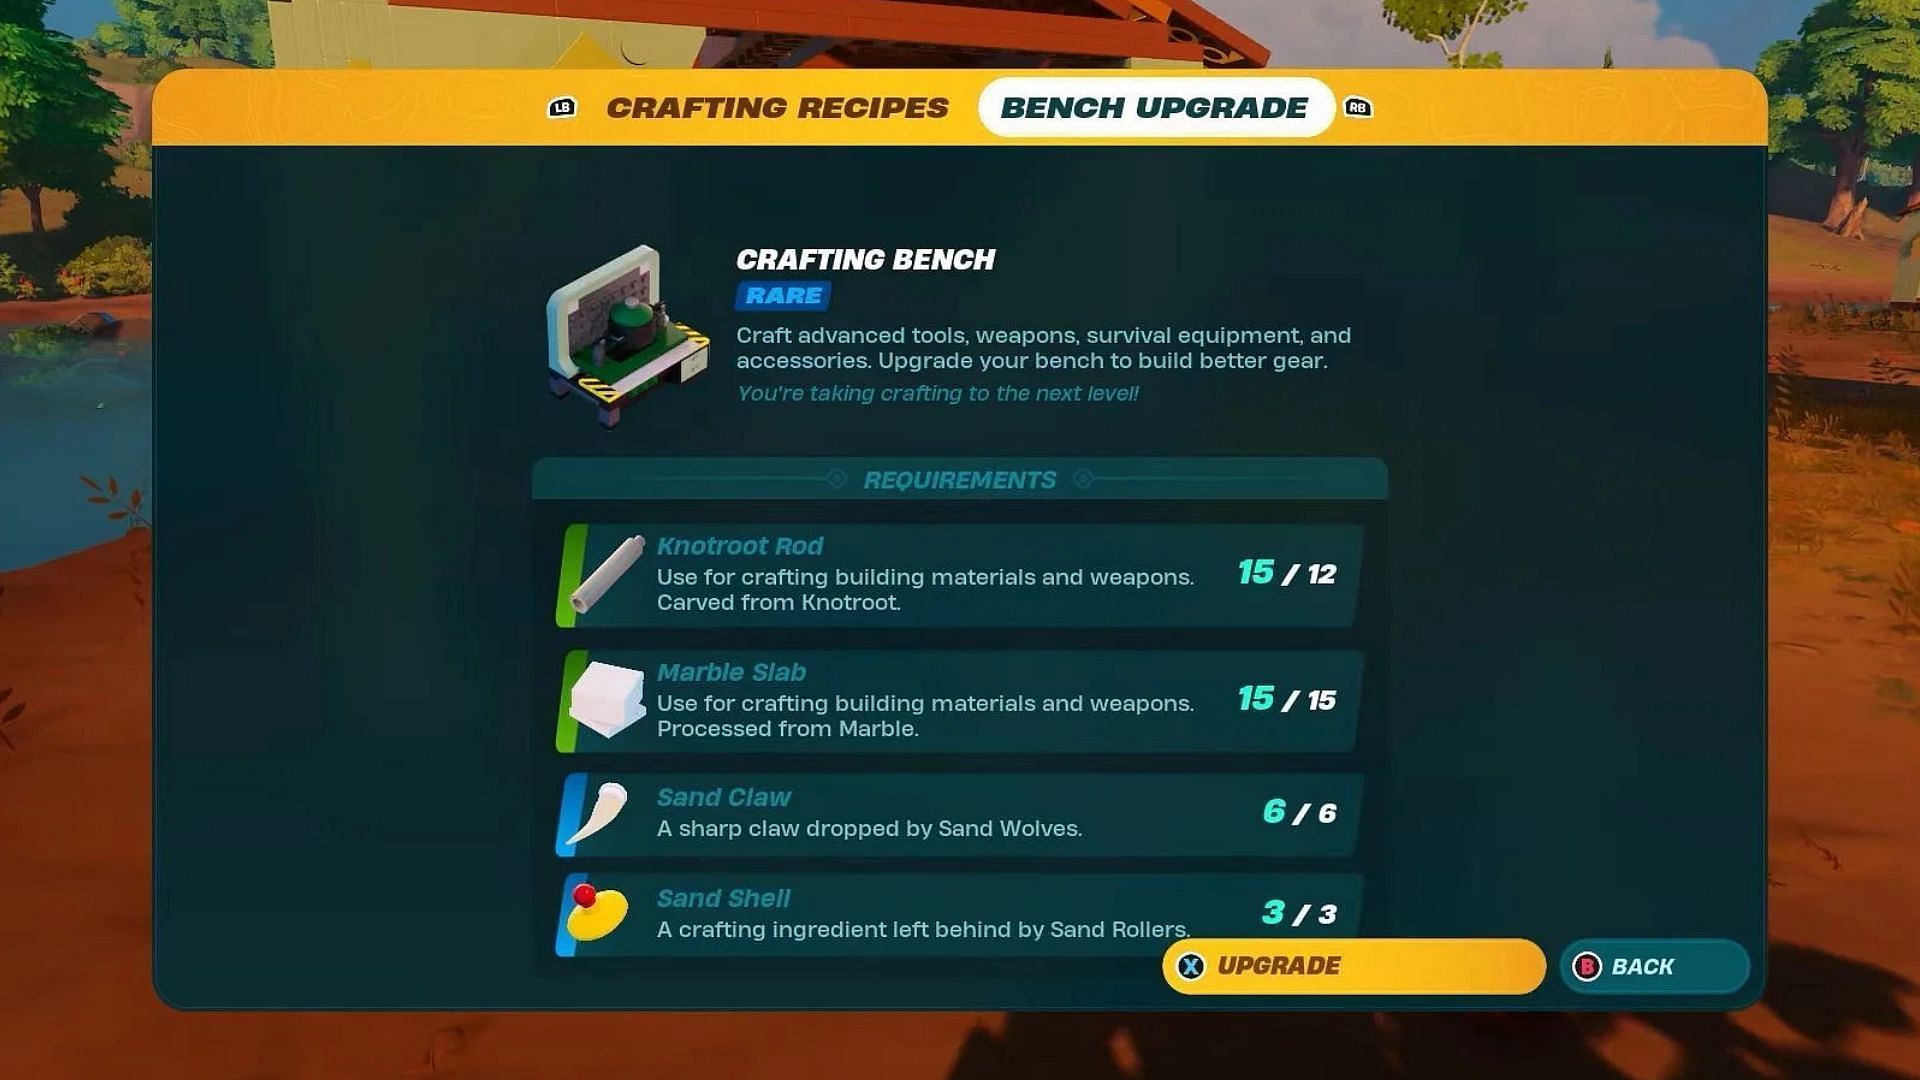 Upgrading Crafting Bench (Image via Perfect Score on YouTube)